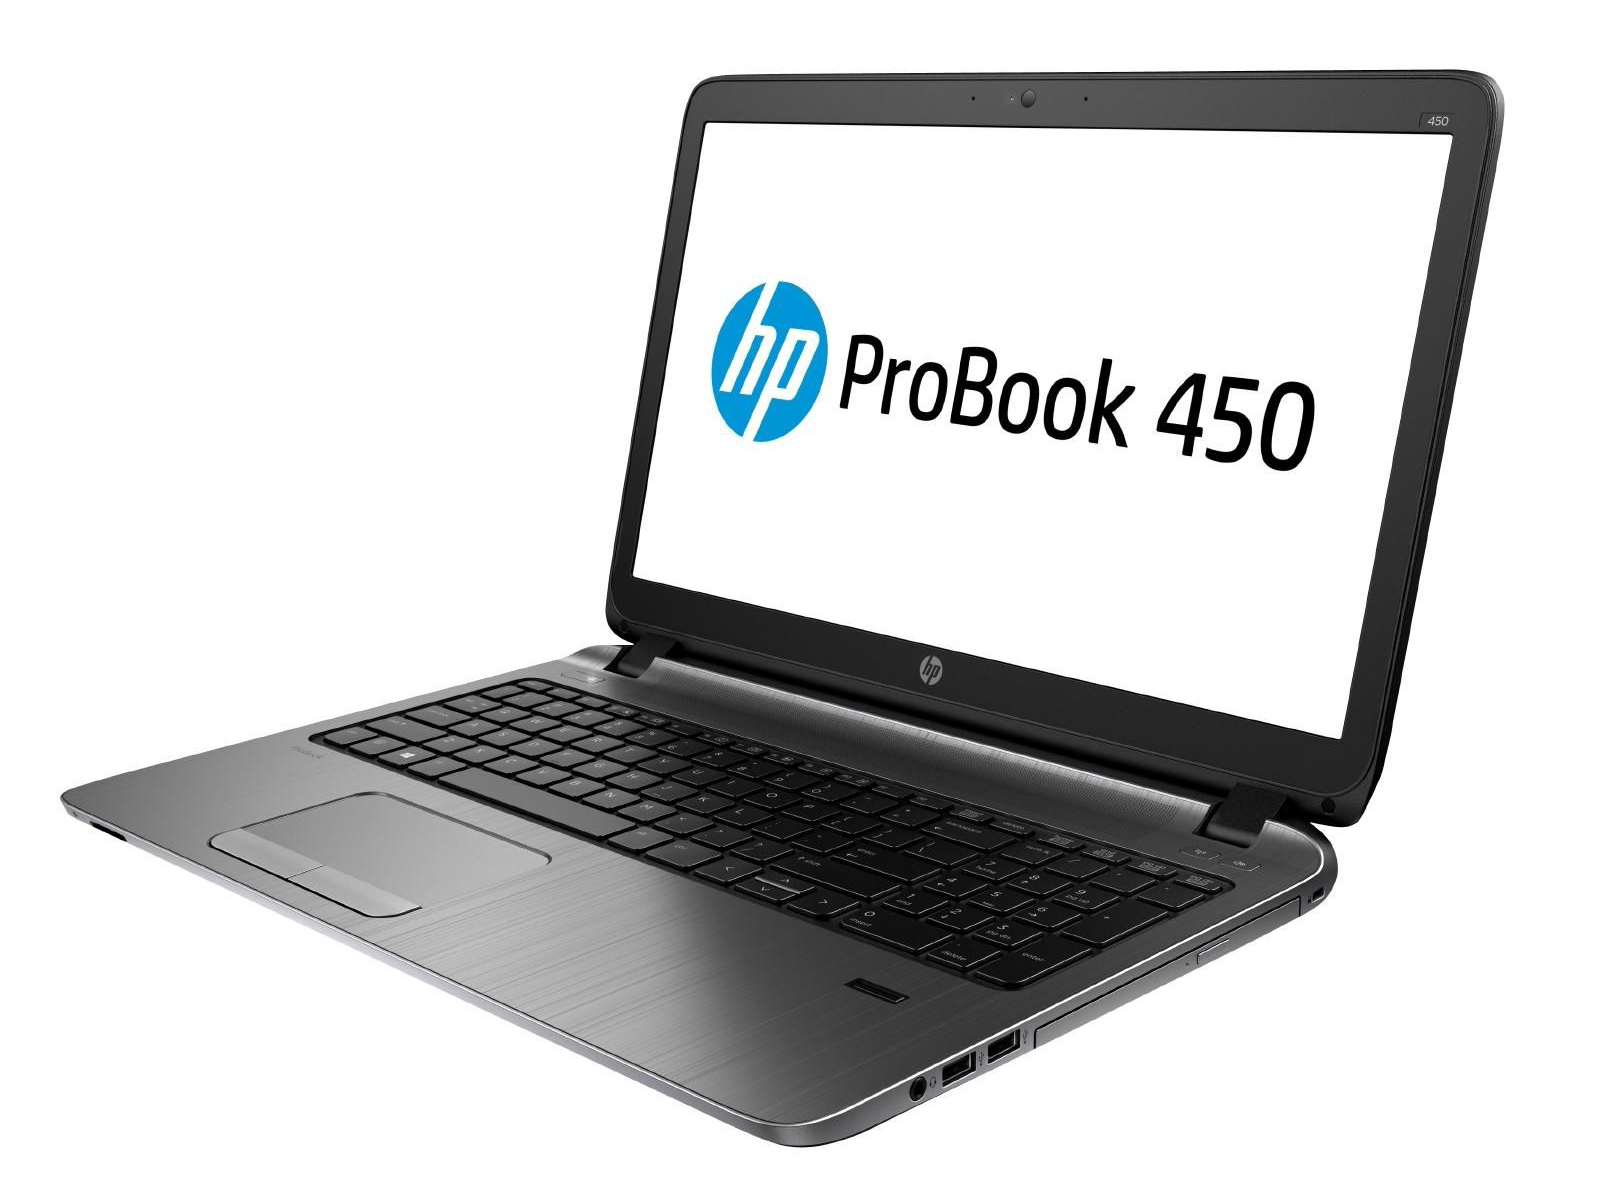 HP ProBook 450 G2 Intel Core i3, 8GB, 240GB SSD, Windows 10